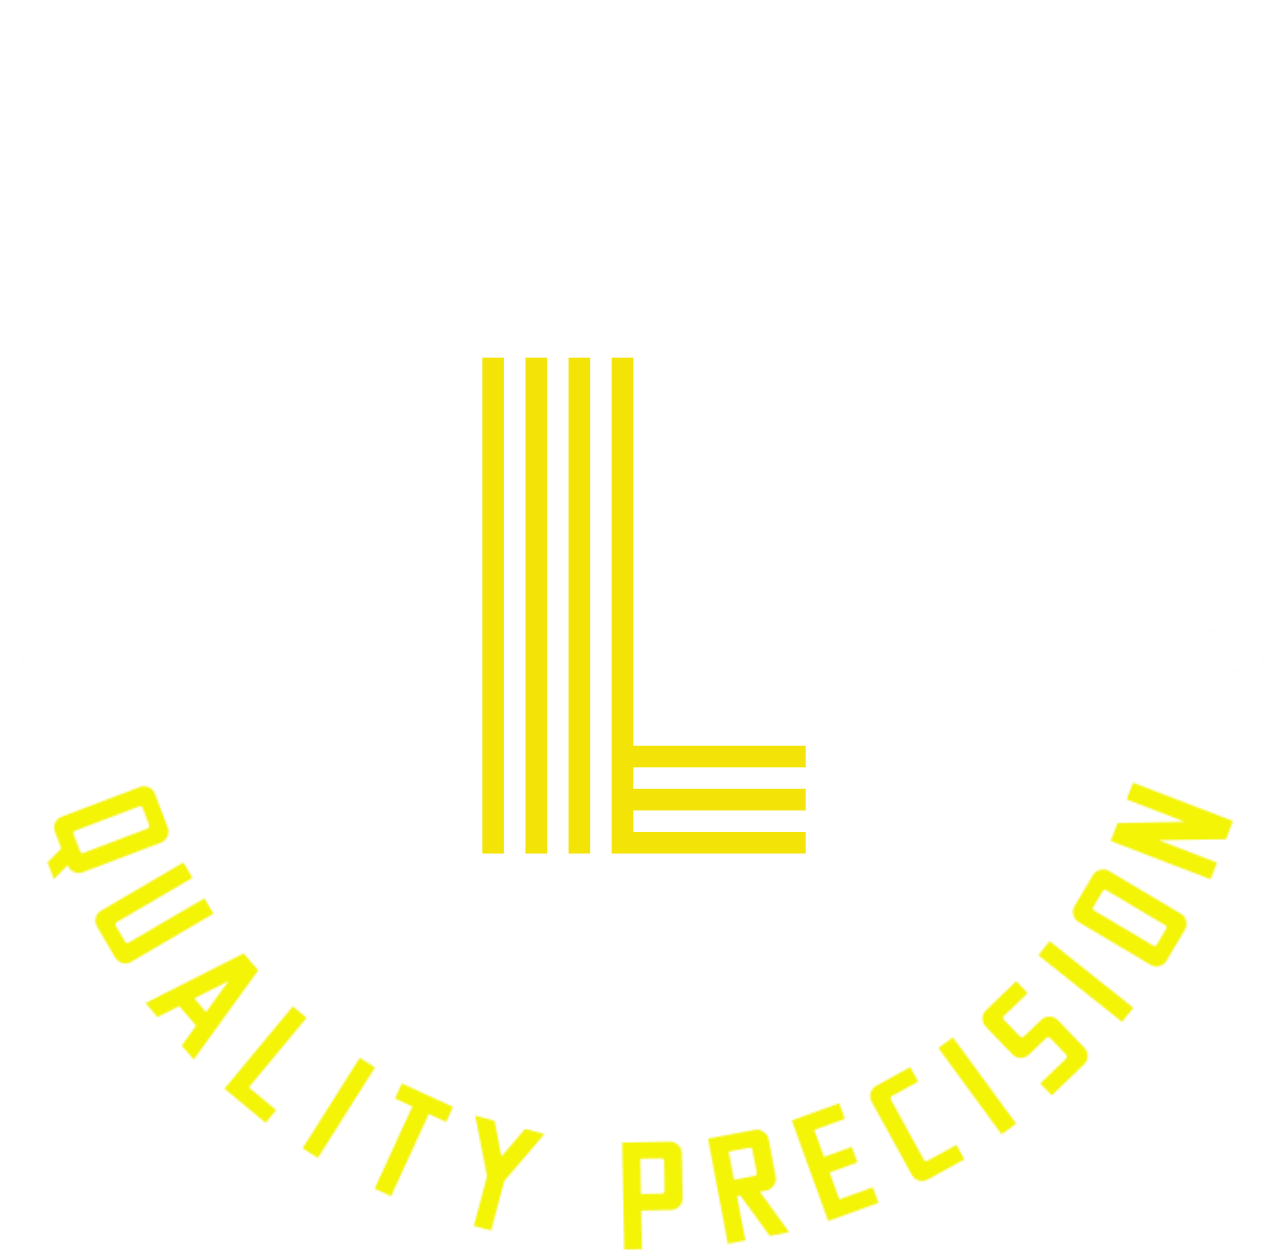 Linemarking Xtra & Asphalting Pty Ltd's logo